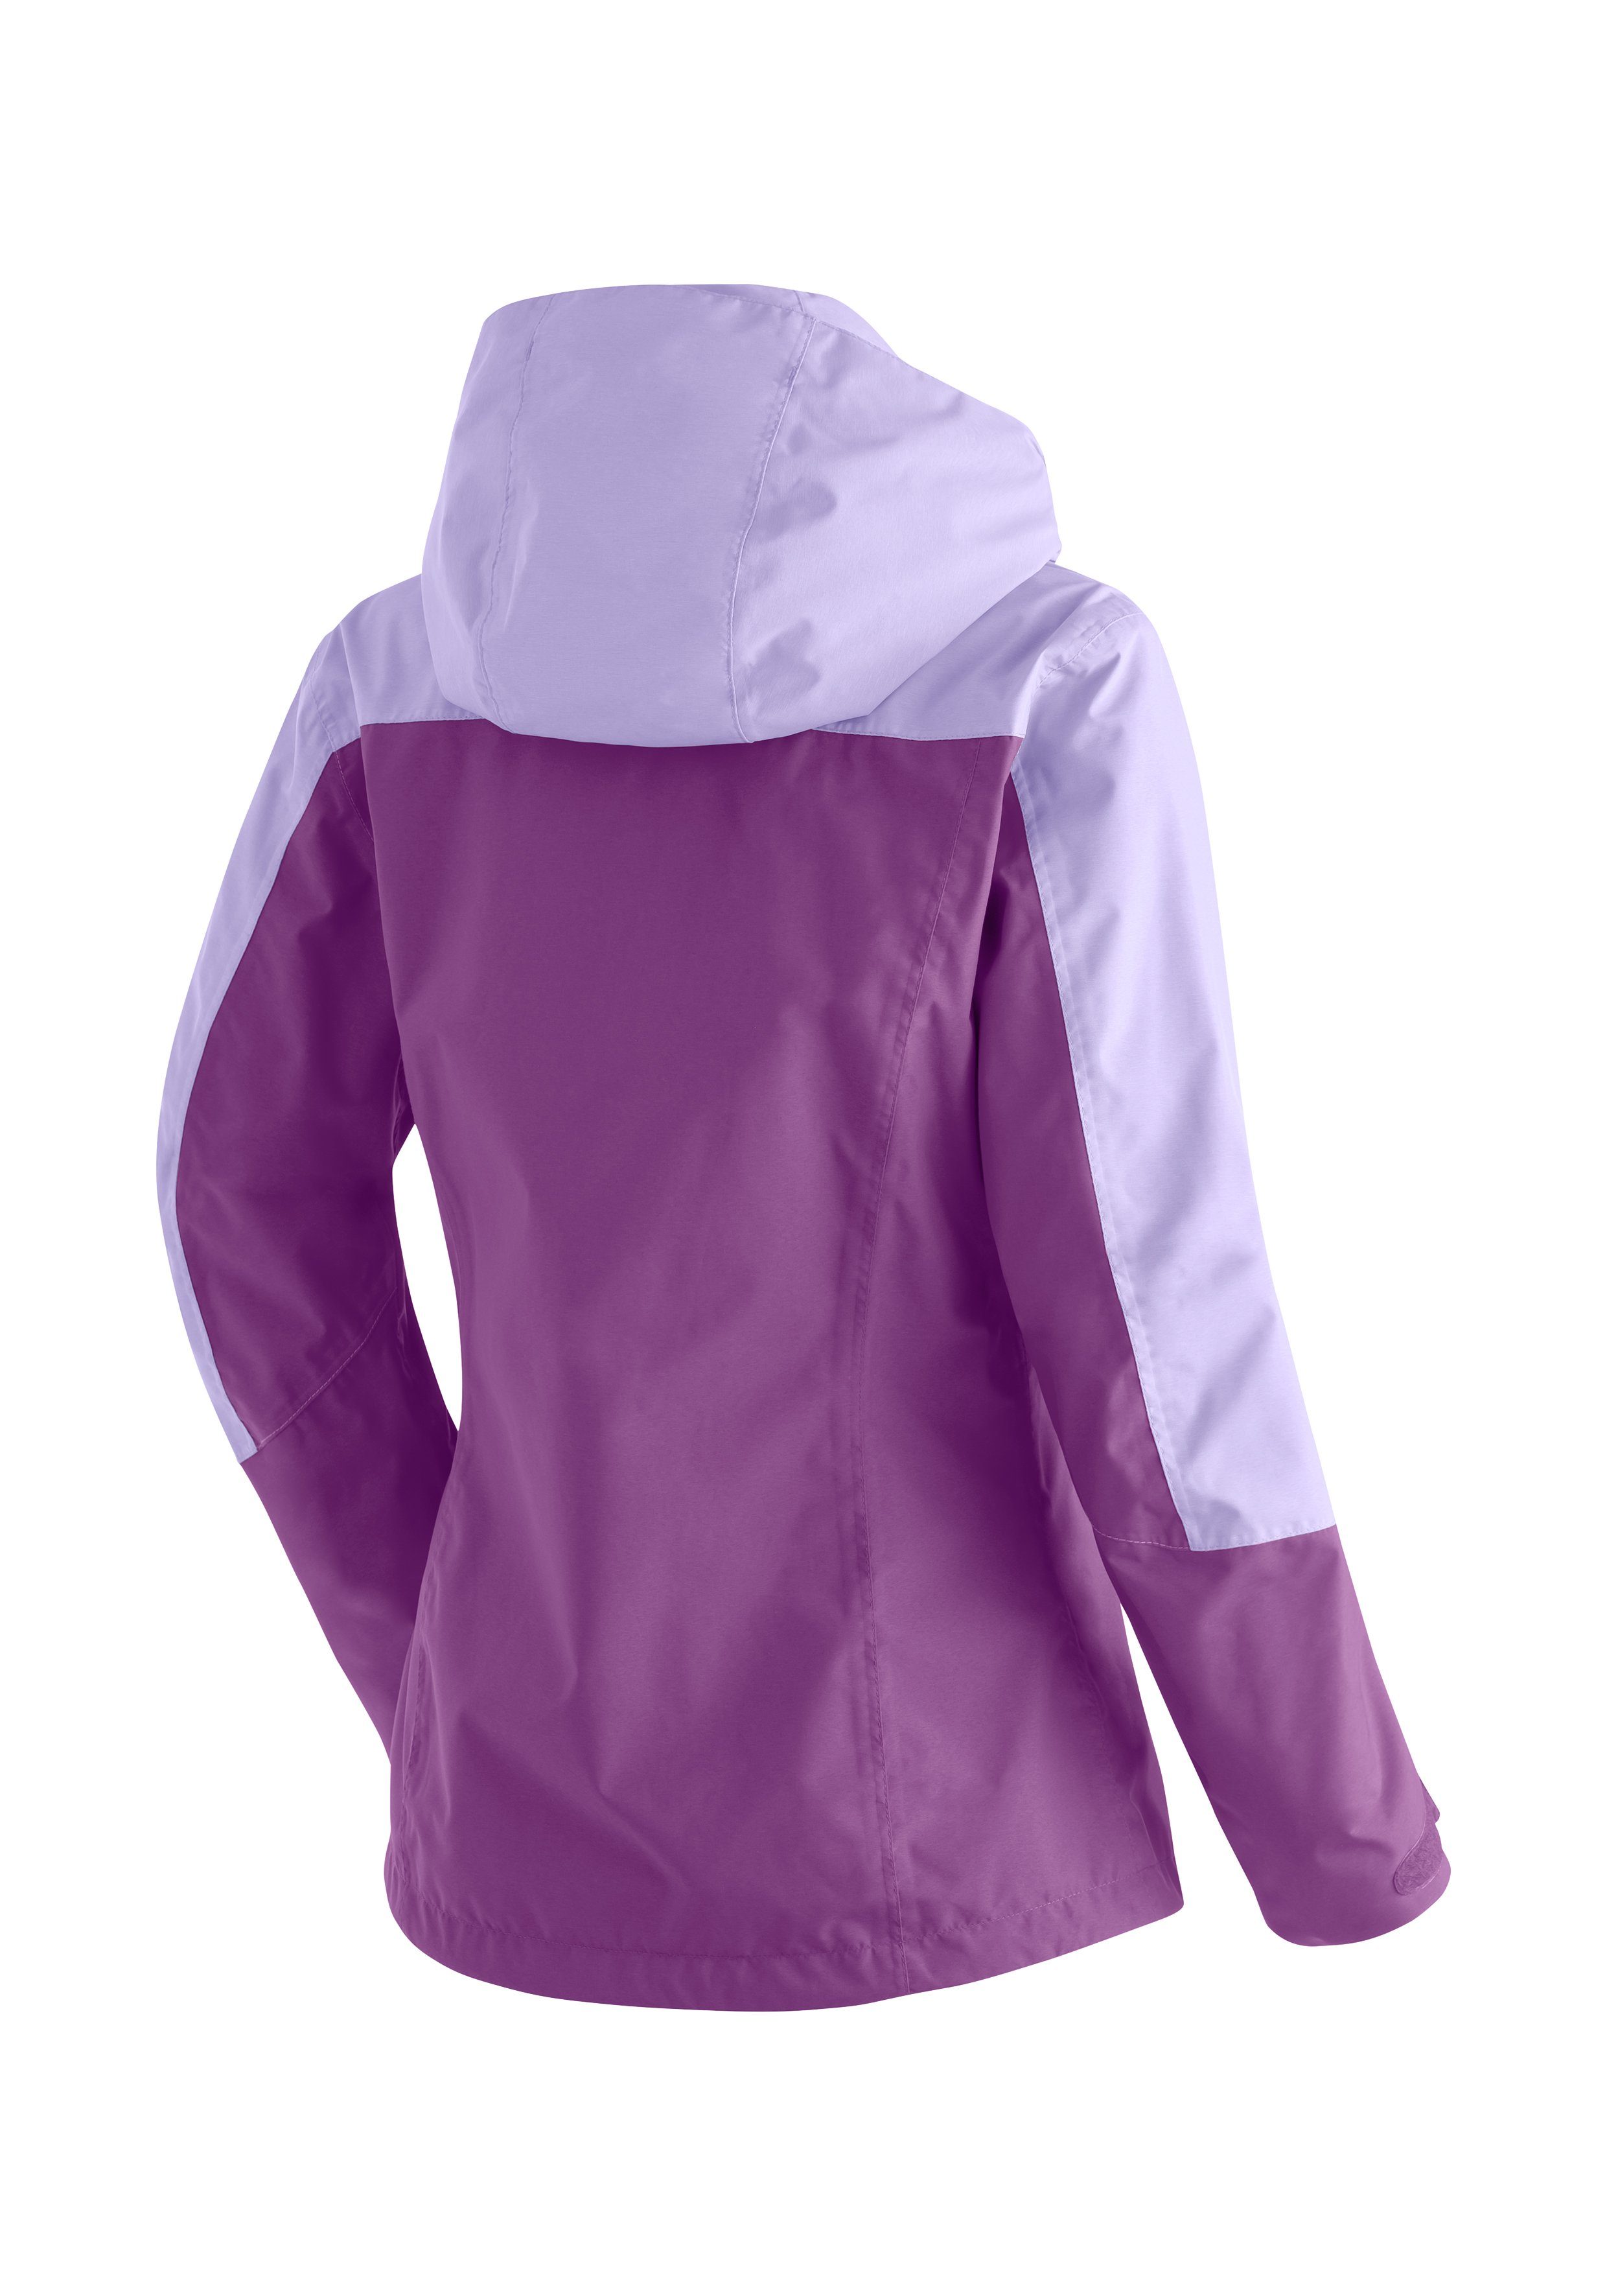 Partu aus Maier Outdoorjacke Funktionsjacke Sports atmungsaktivem Wasserdichte W purpurviolett Material